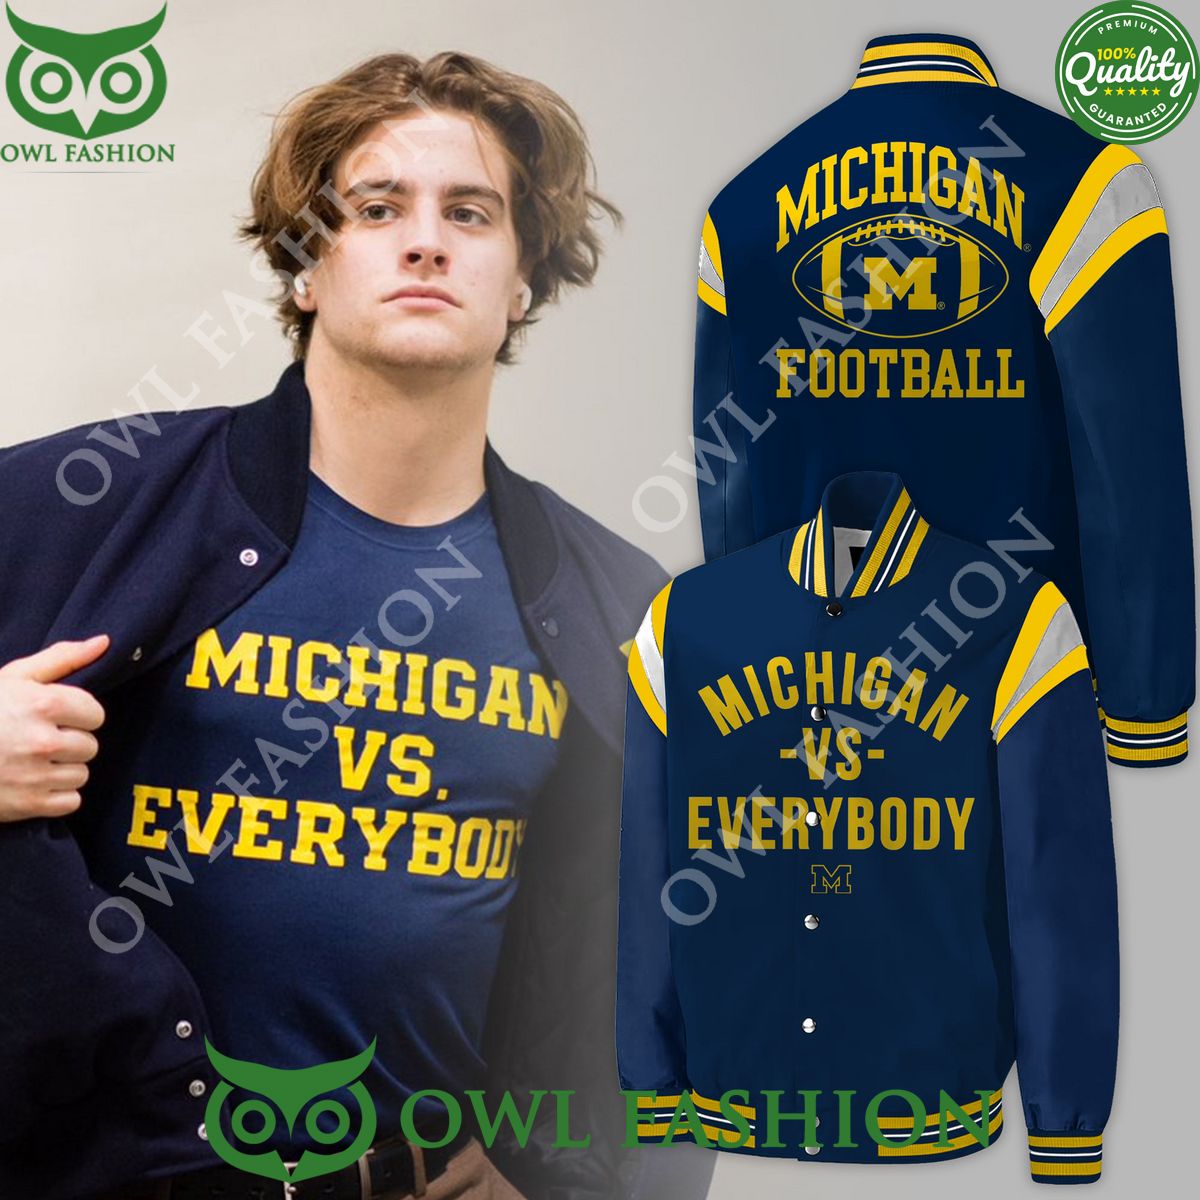 michigan vs everybody michigan football bomber jacket 1 4X9Q1.jpg